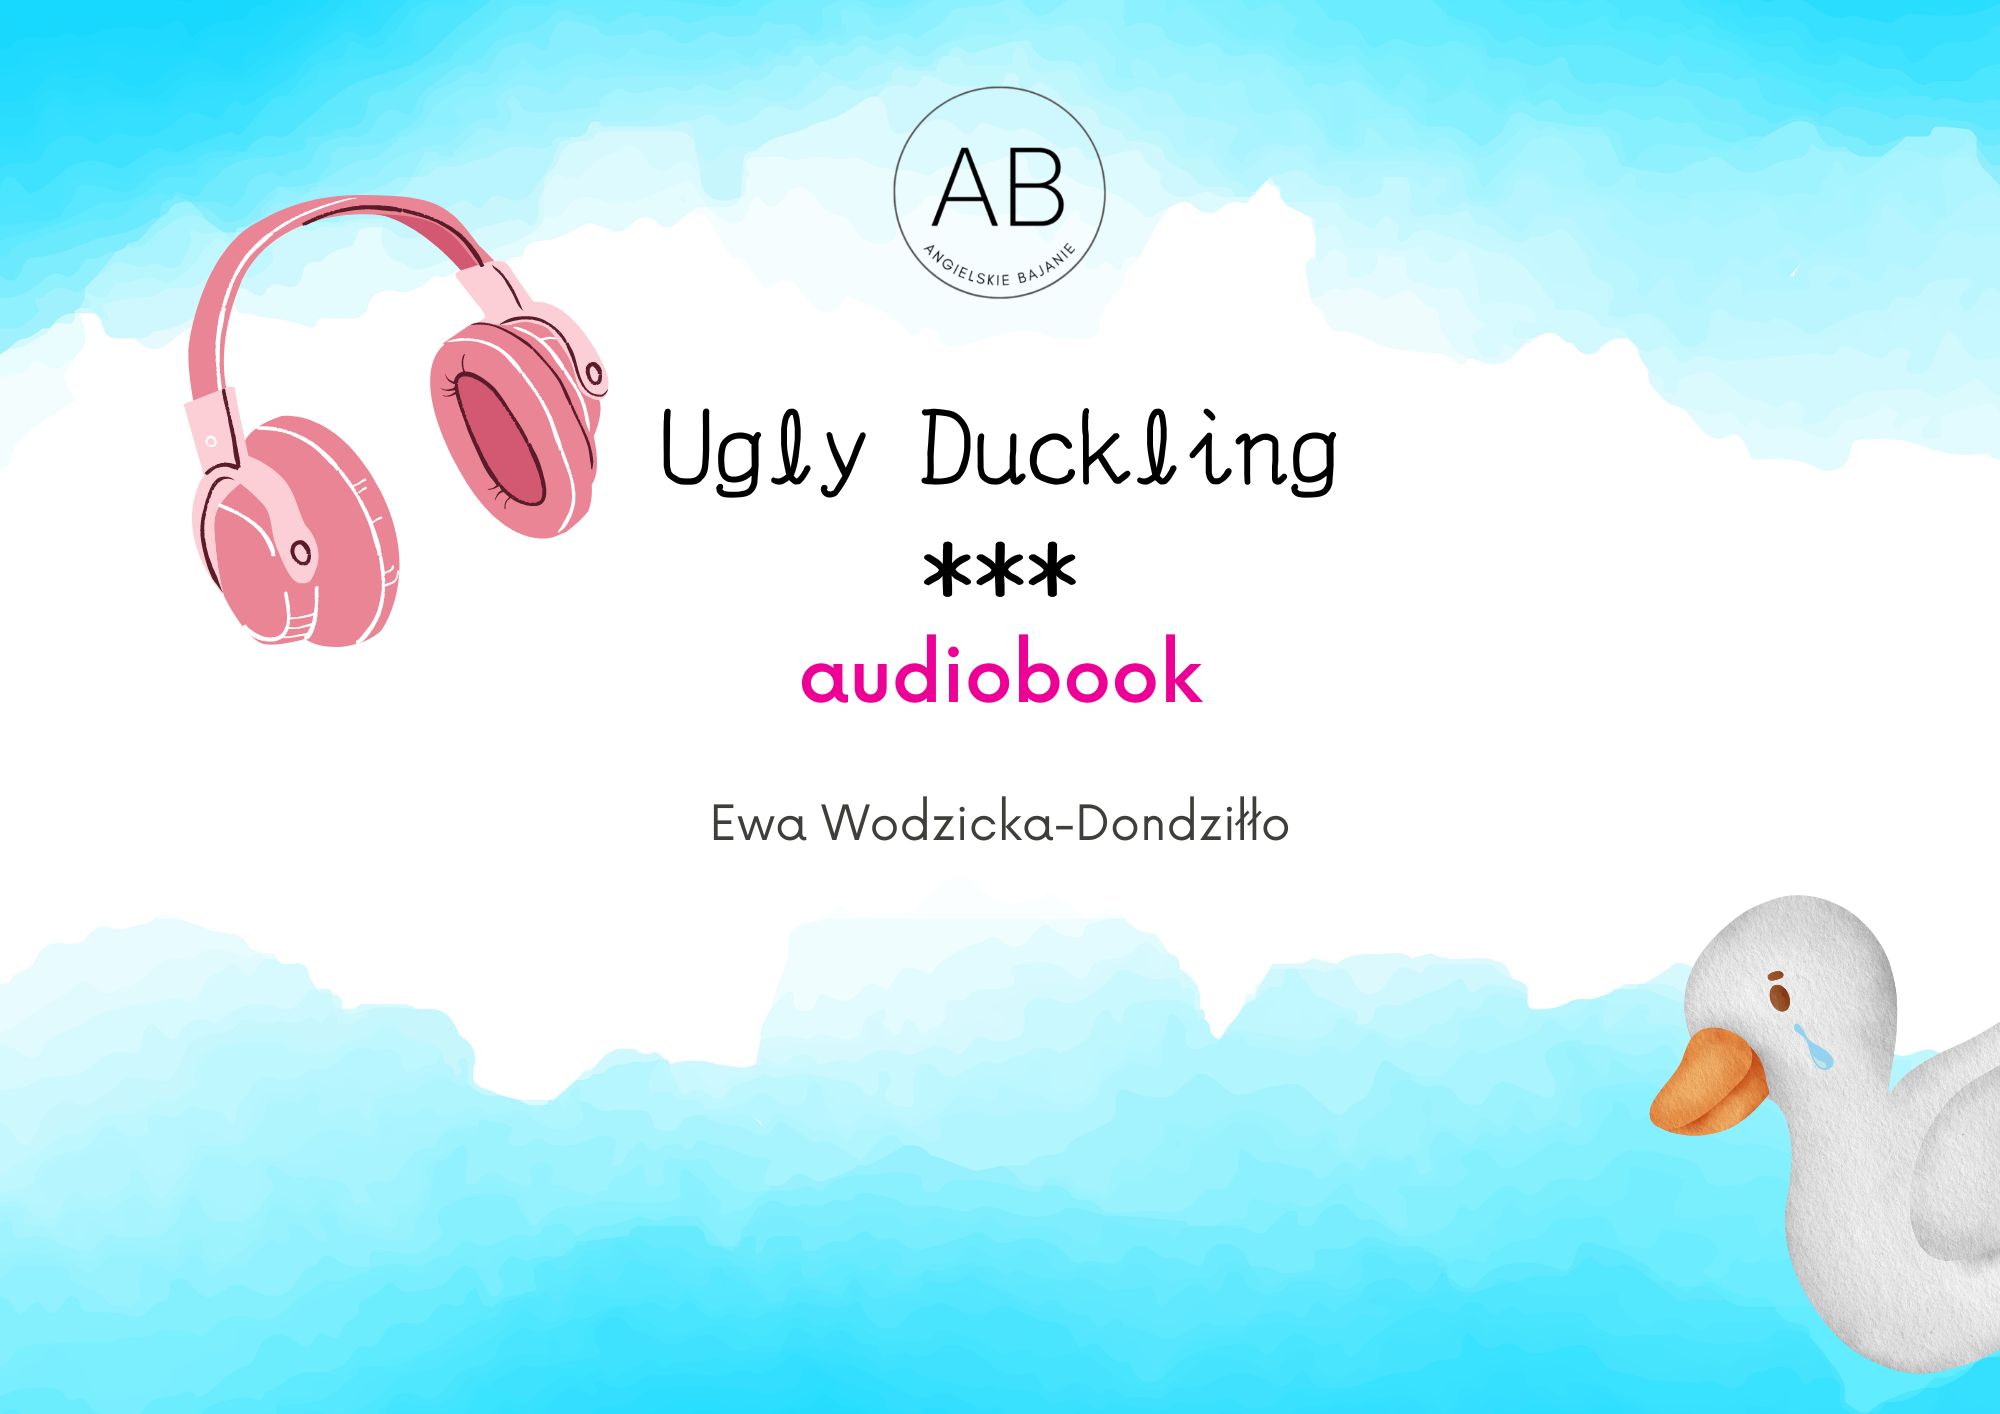 Ugly Duckling audiobook